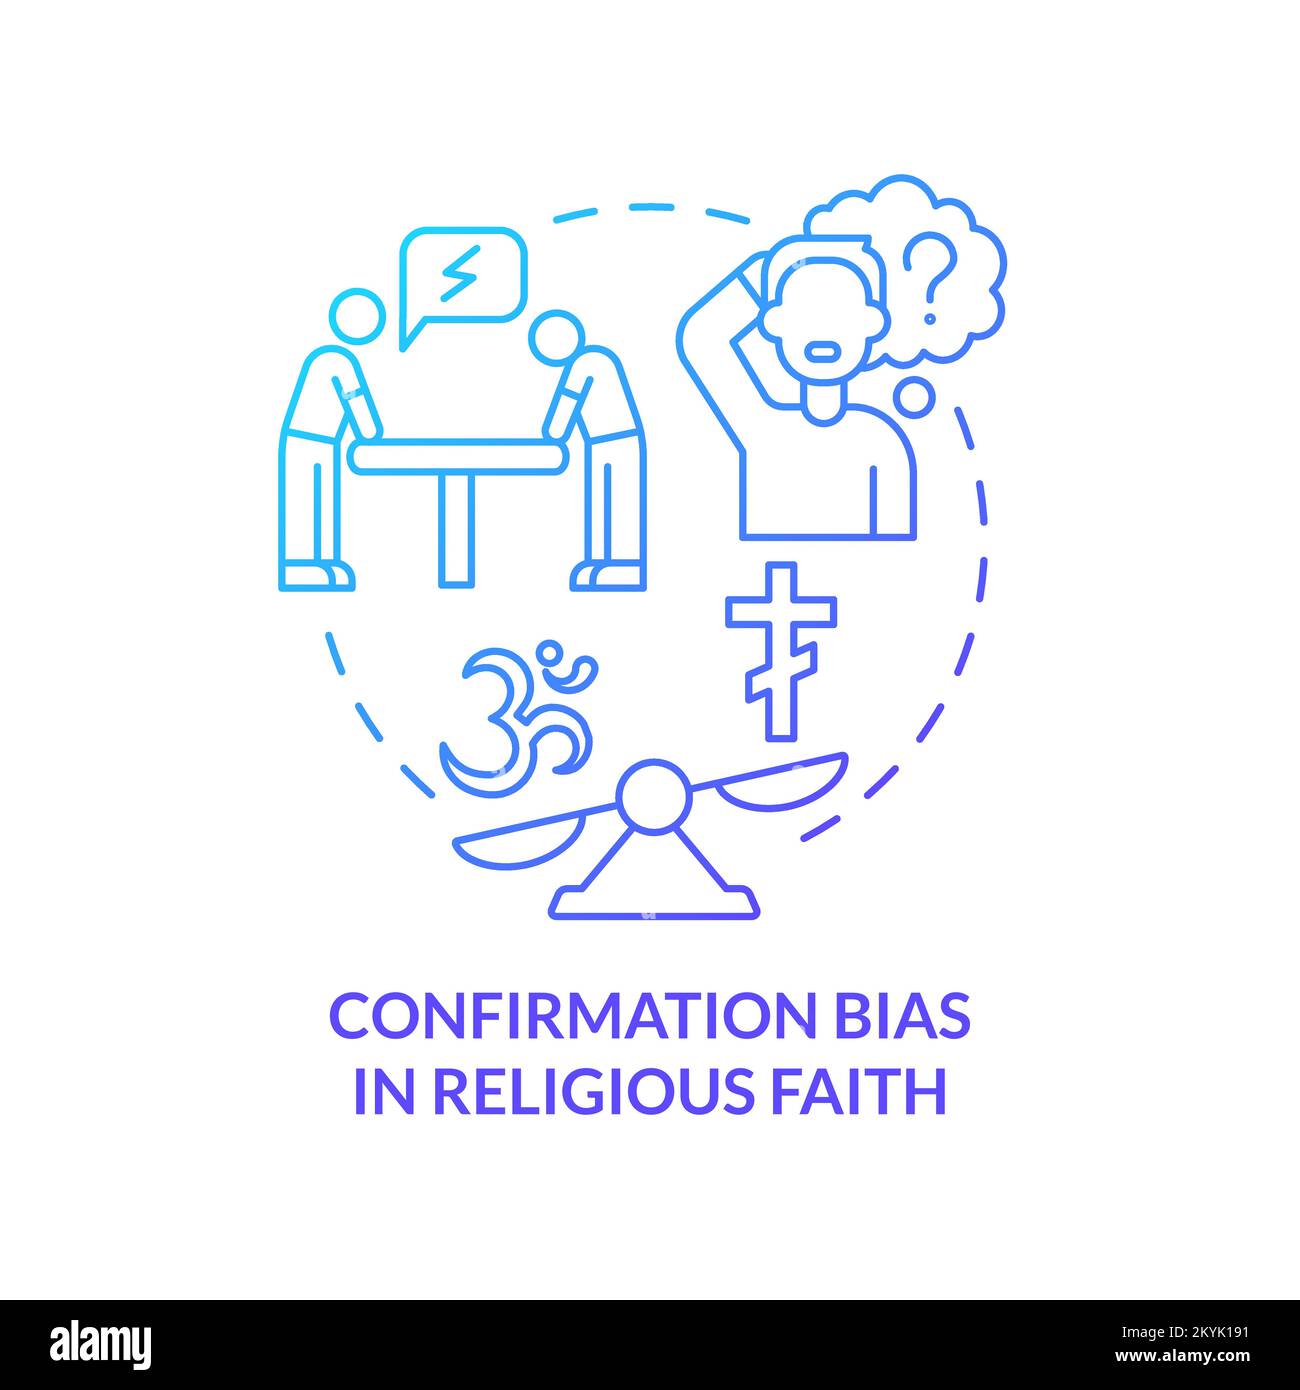 Confirmation bias in religious faith blue gradient concept icon Stock Vector